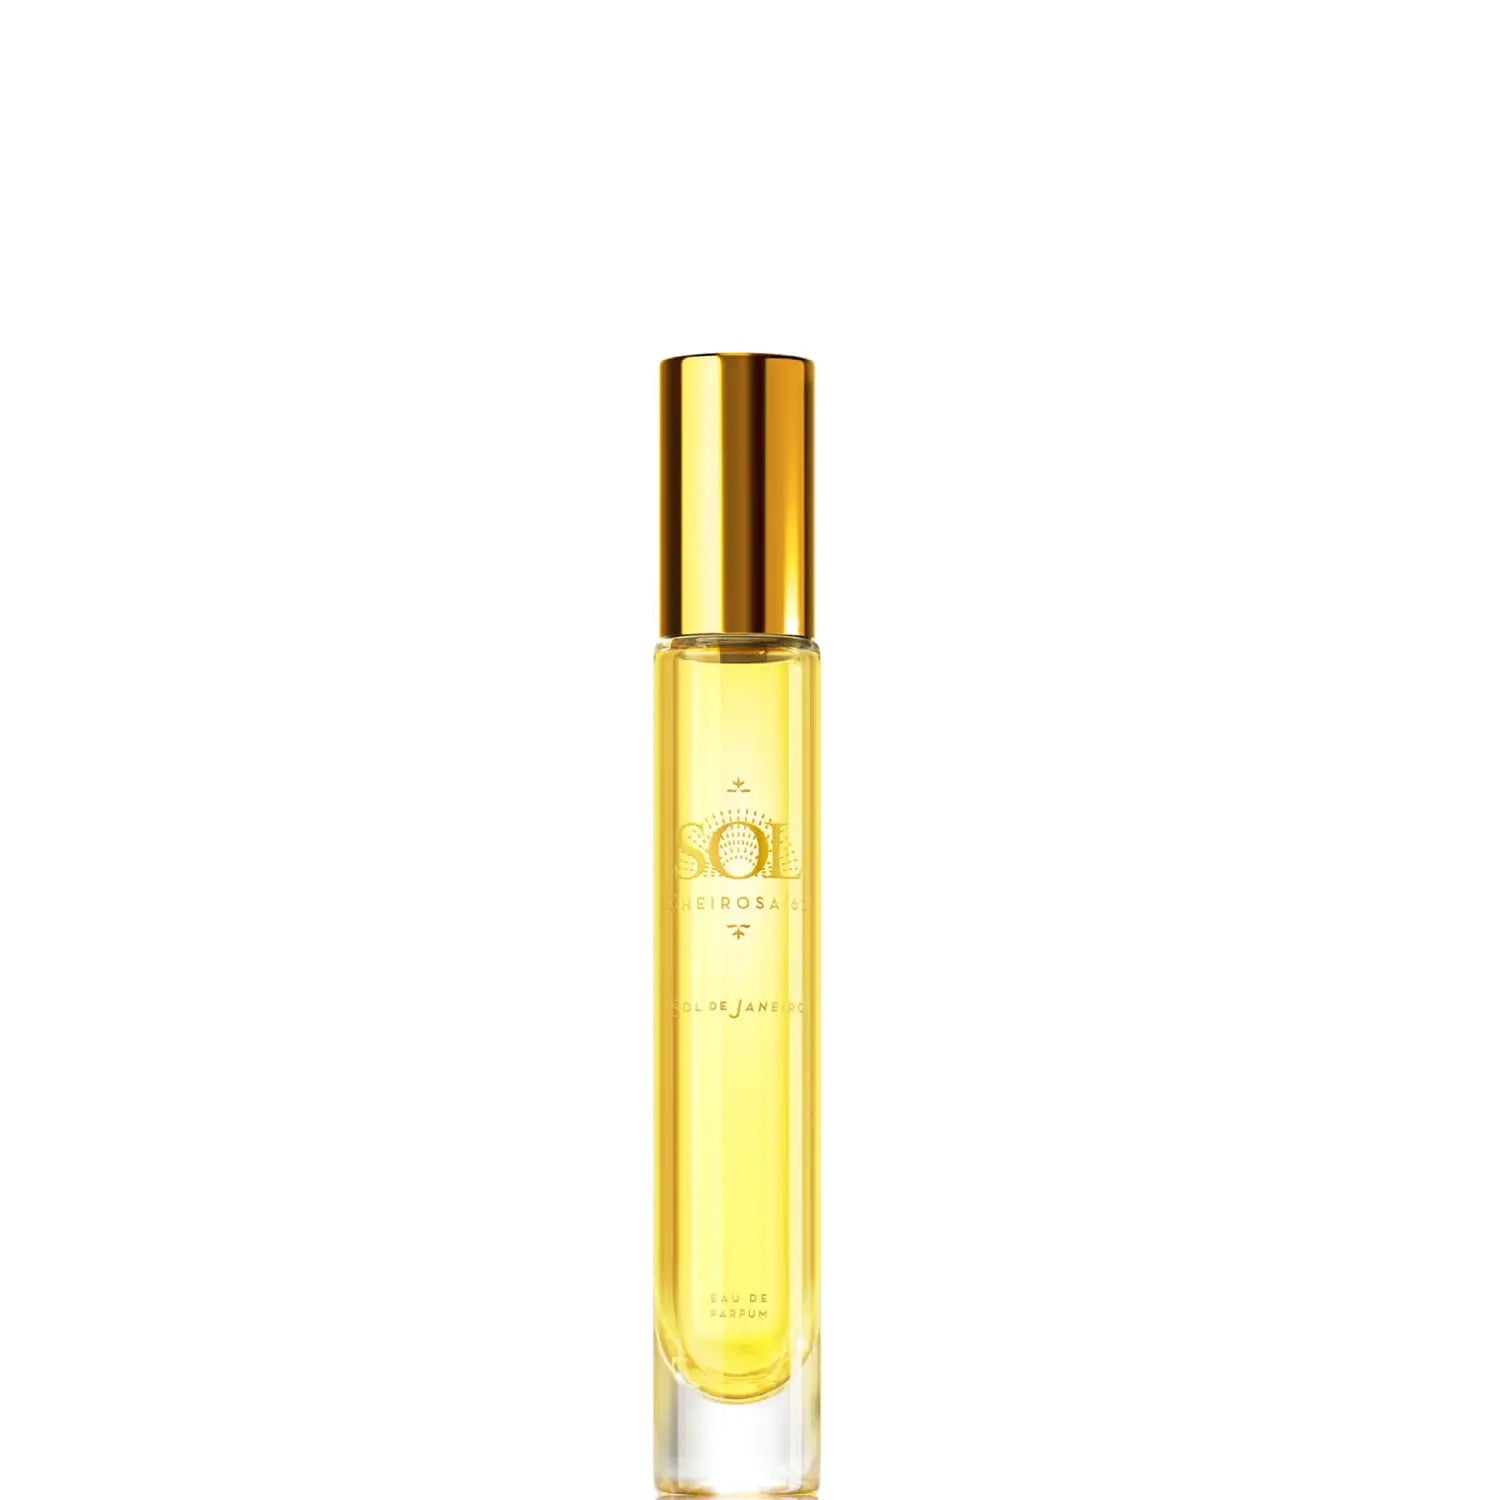 Sol de Janeiro Cheirosa ' 62 Eau de Parfum 8ml Grace Beauty